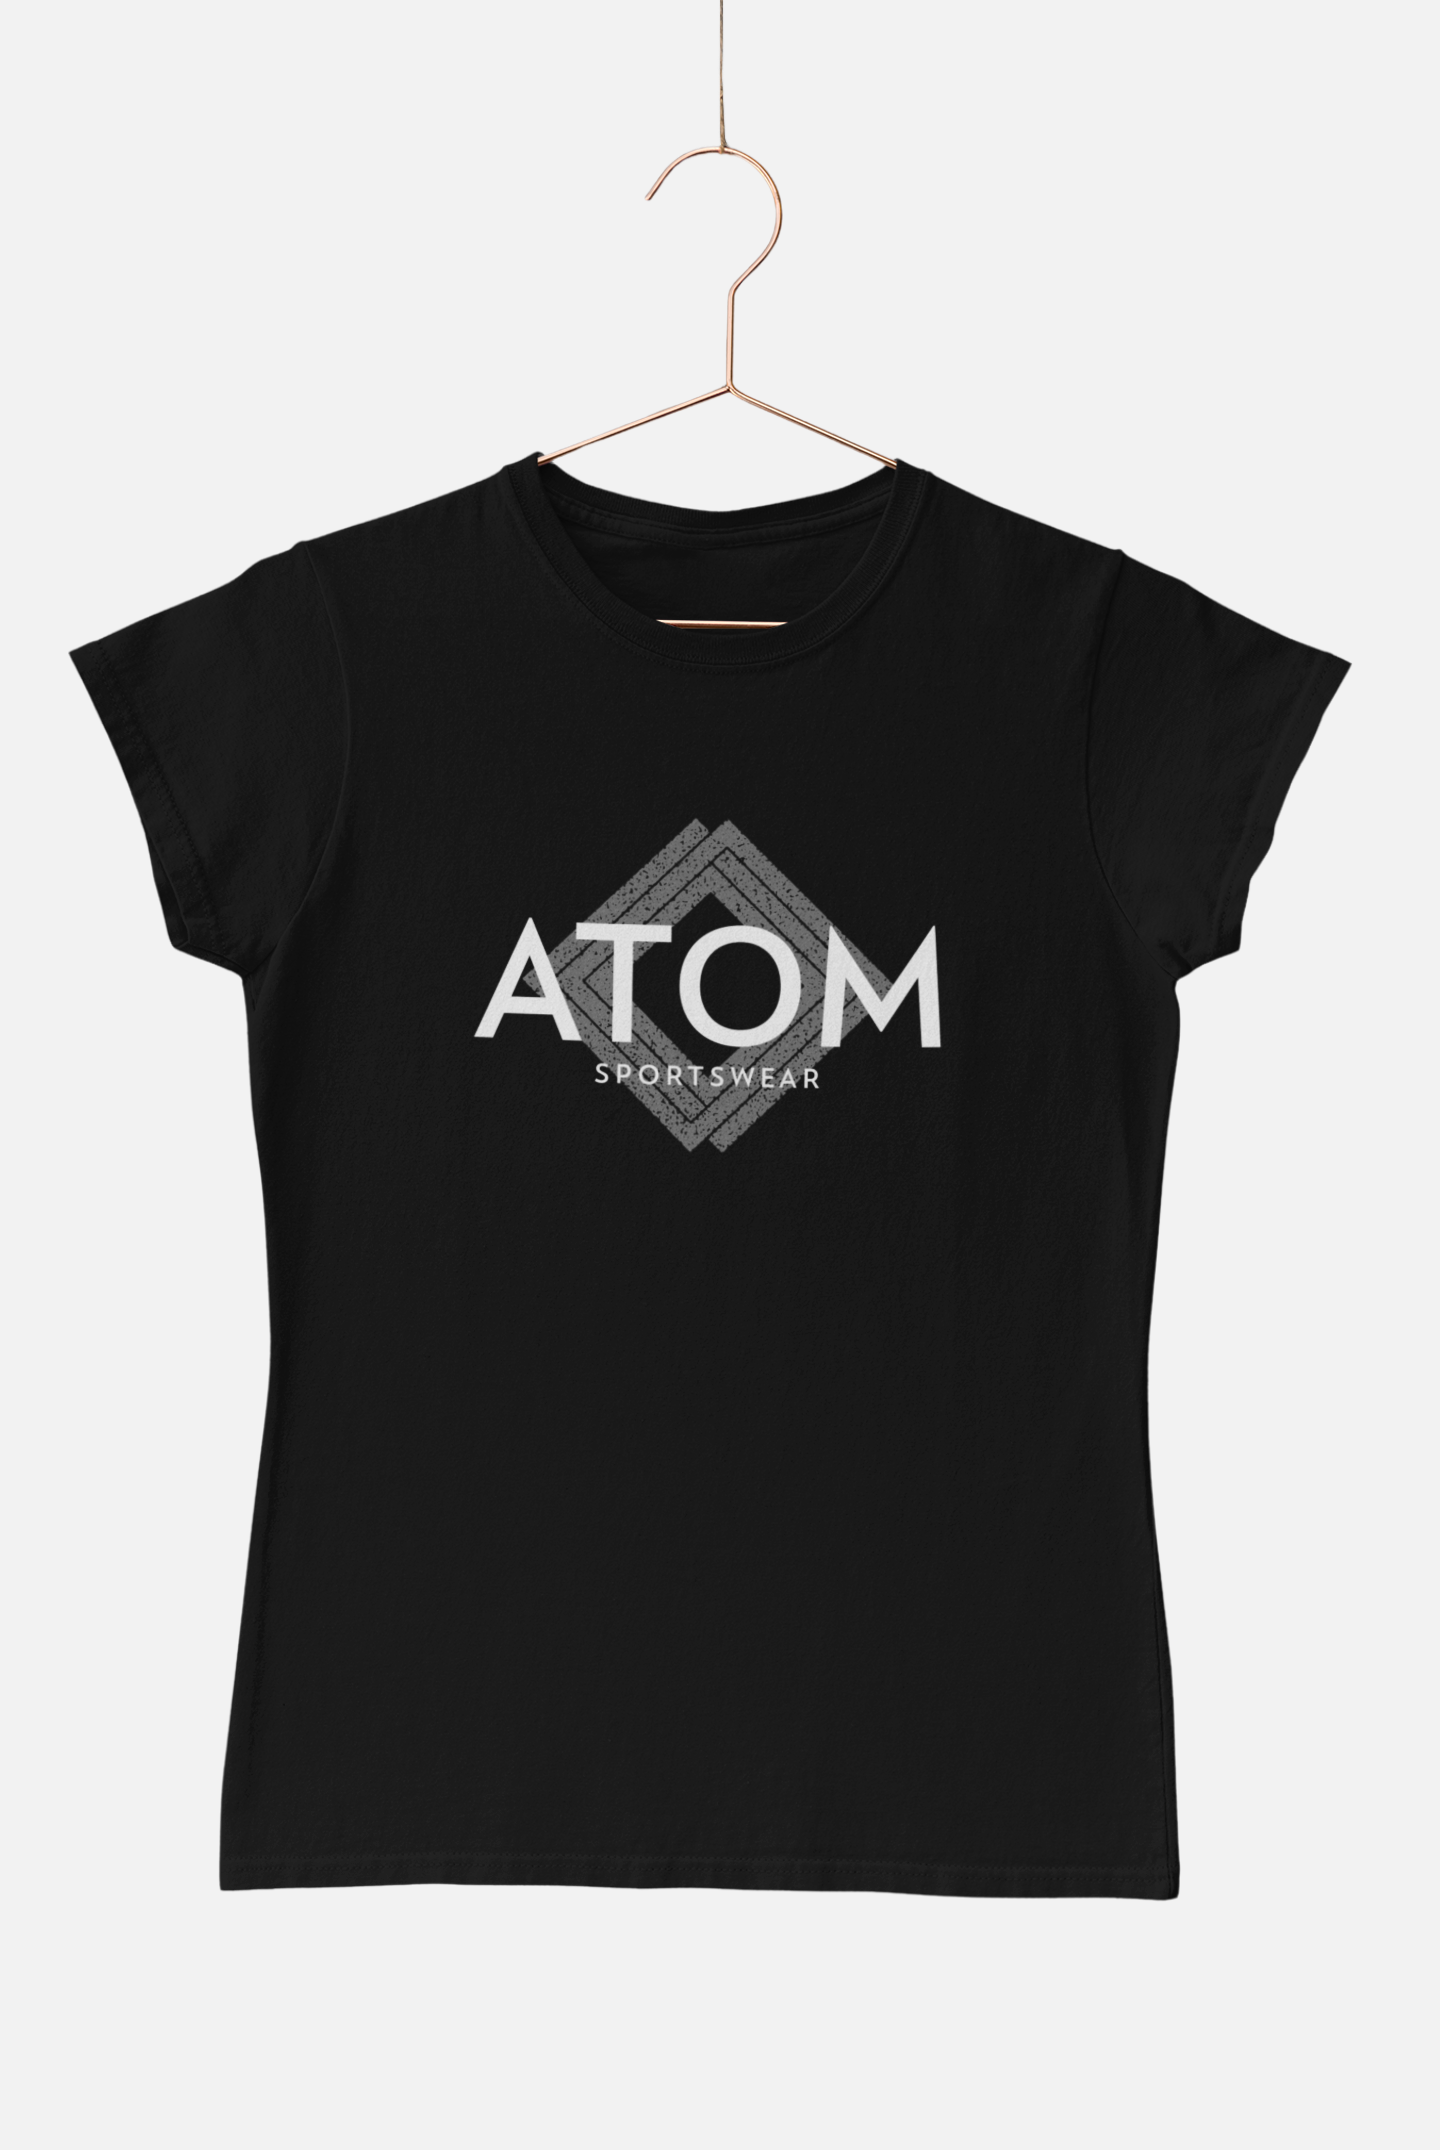 ATOM Signature Sportswear Black T-Shirt for Women. 